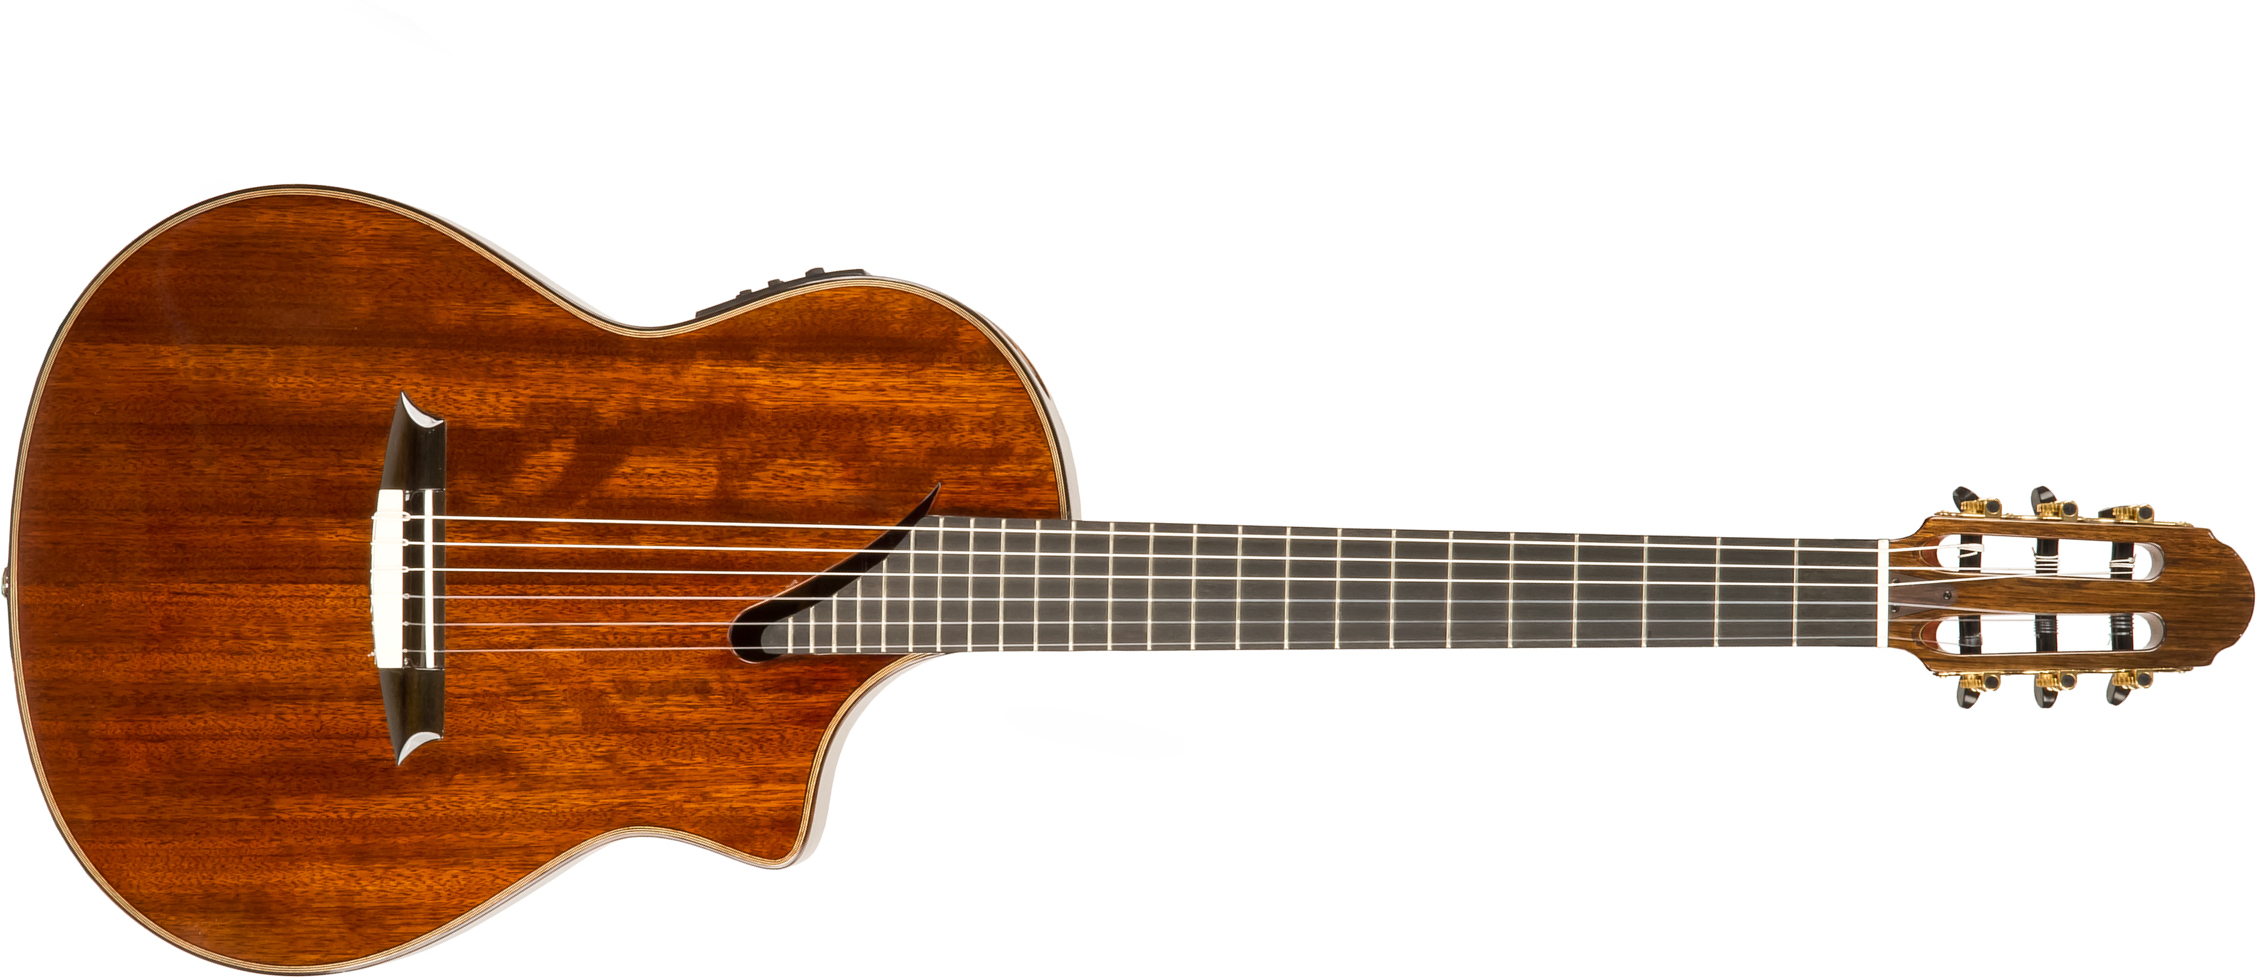 Martinez Mscc-14ov Performer Tout Ovangkol Rw +etui - Natural - Classical guitar 4/4 size - Main picture